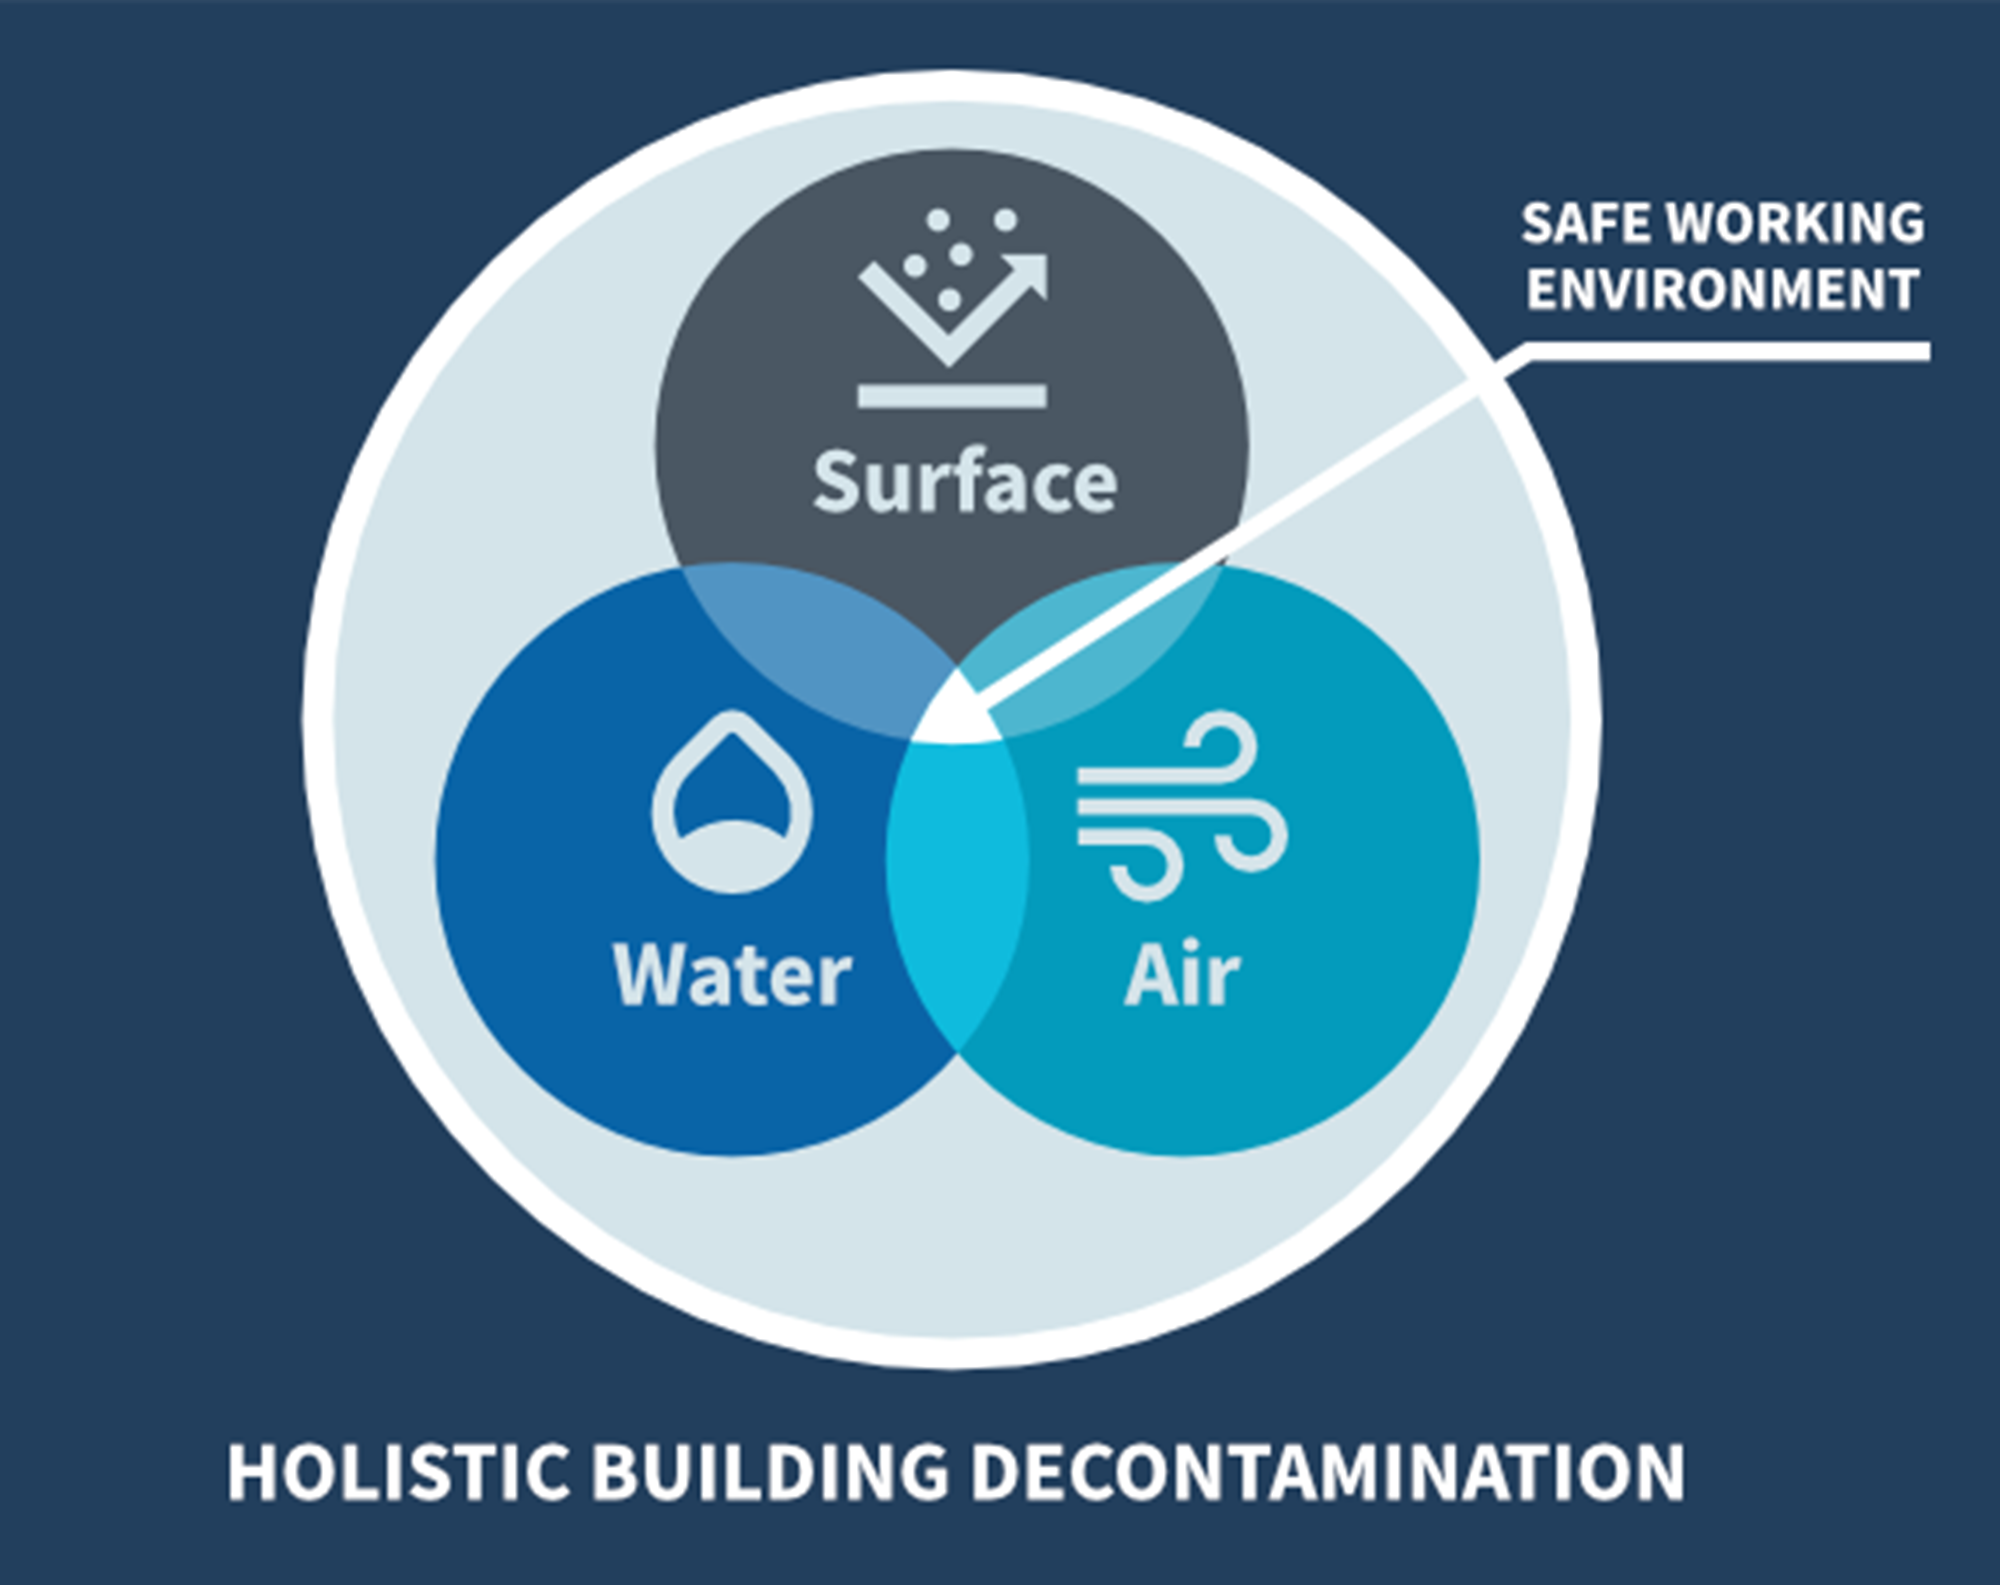 Holistic Building Decontamination Diagram